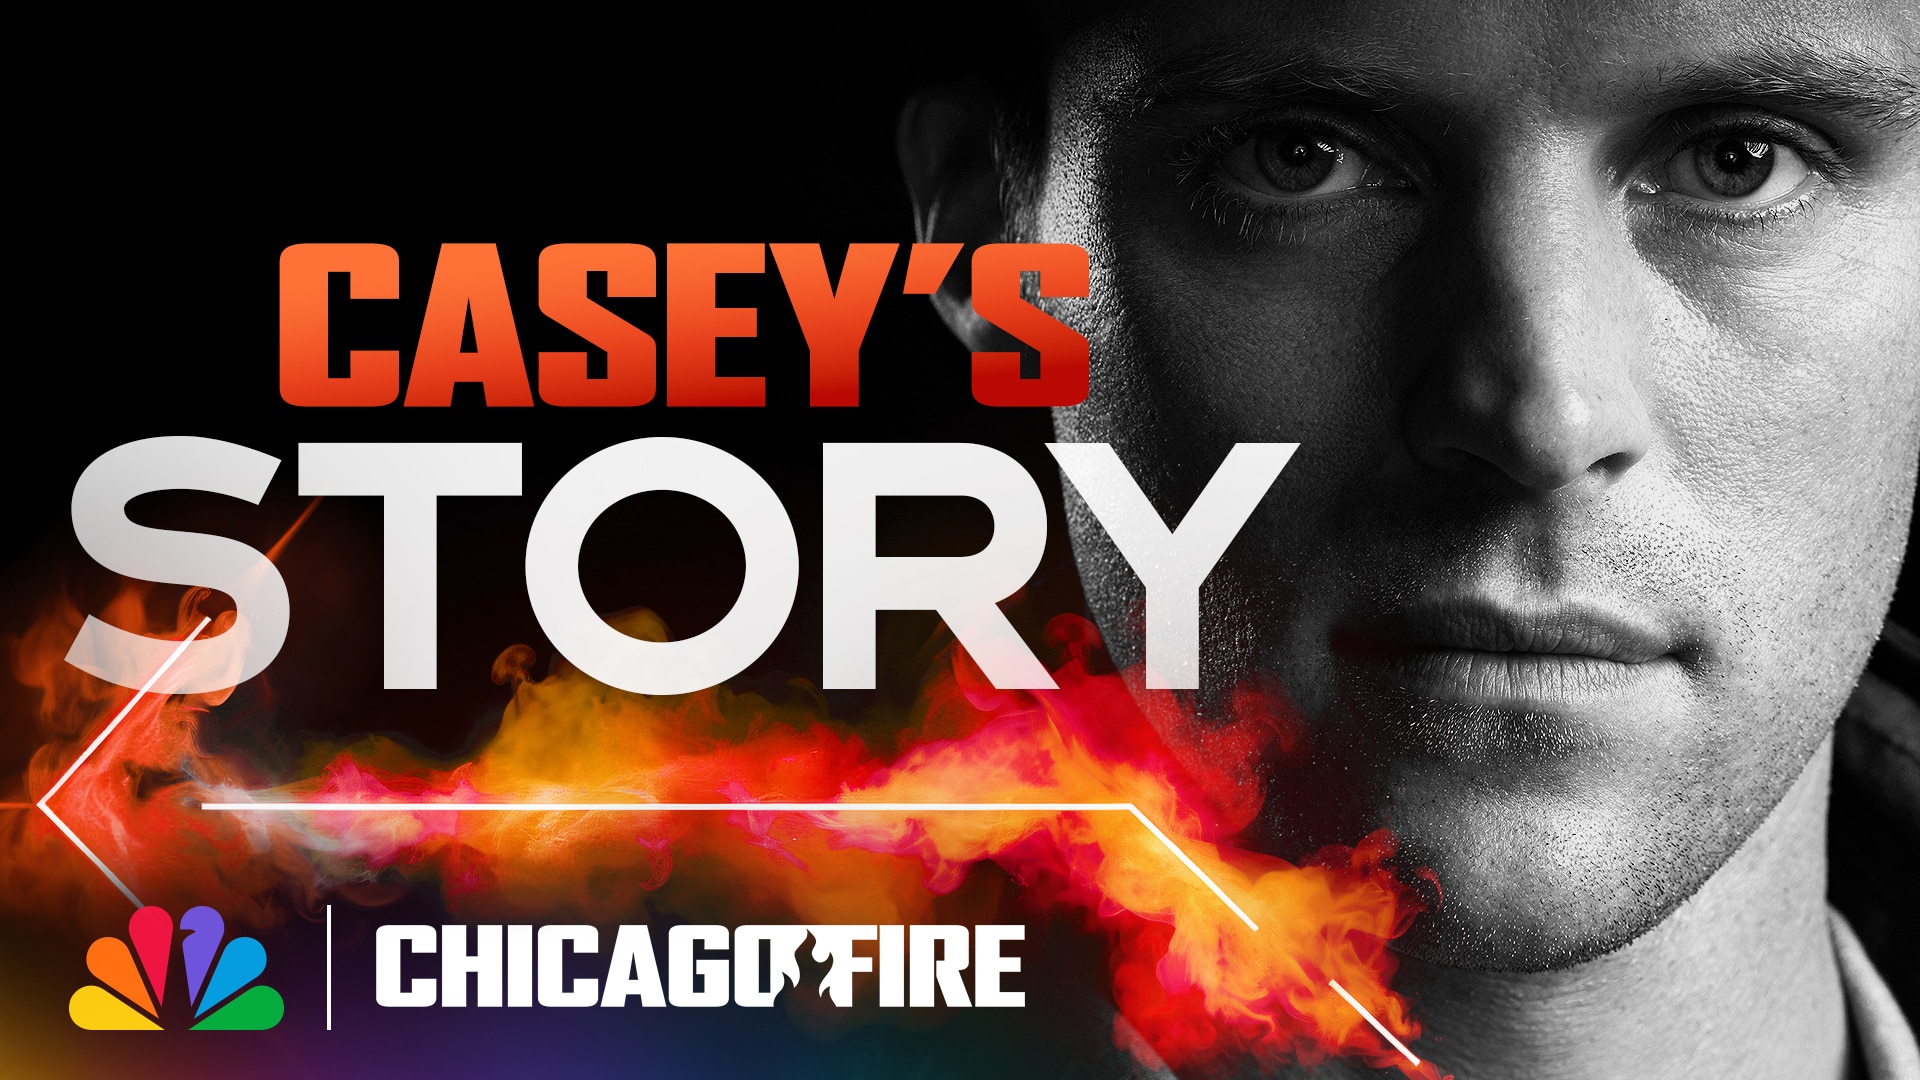 Donde assistir Chicago Fire - ver séries online